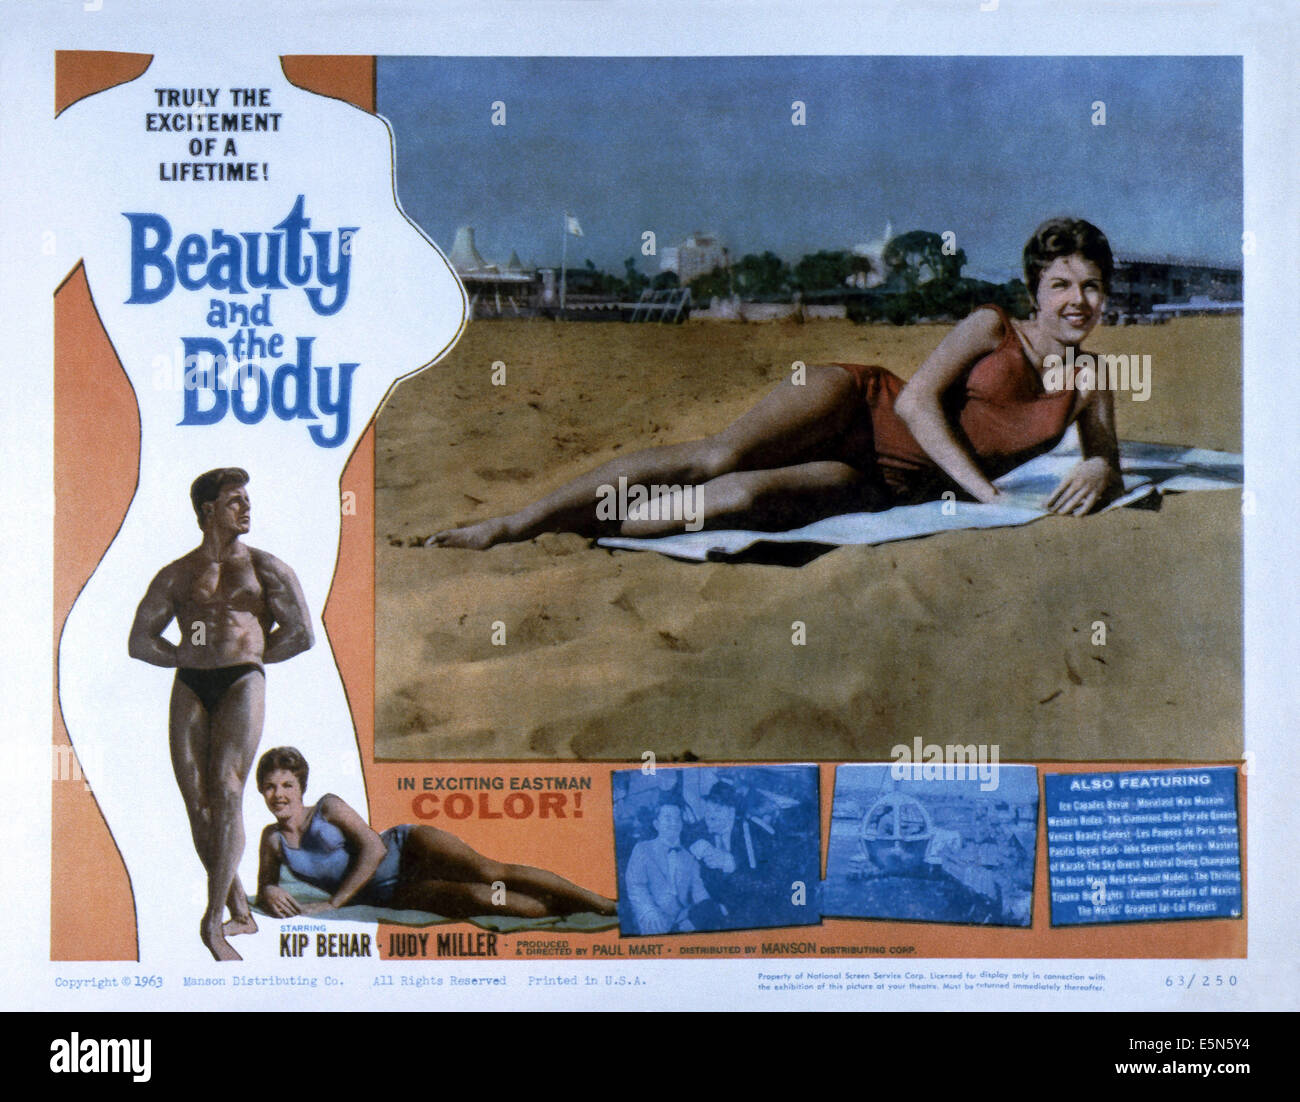 BEAUTY AND THE BODY, Kip Behar (standing left), 1963 Stock Photo